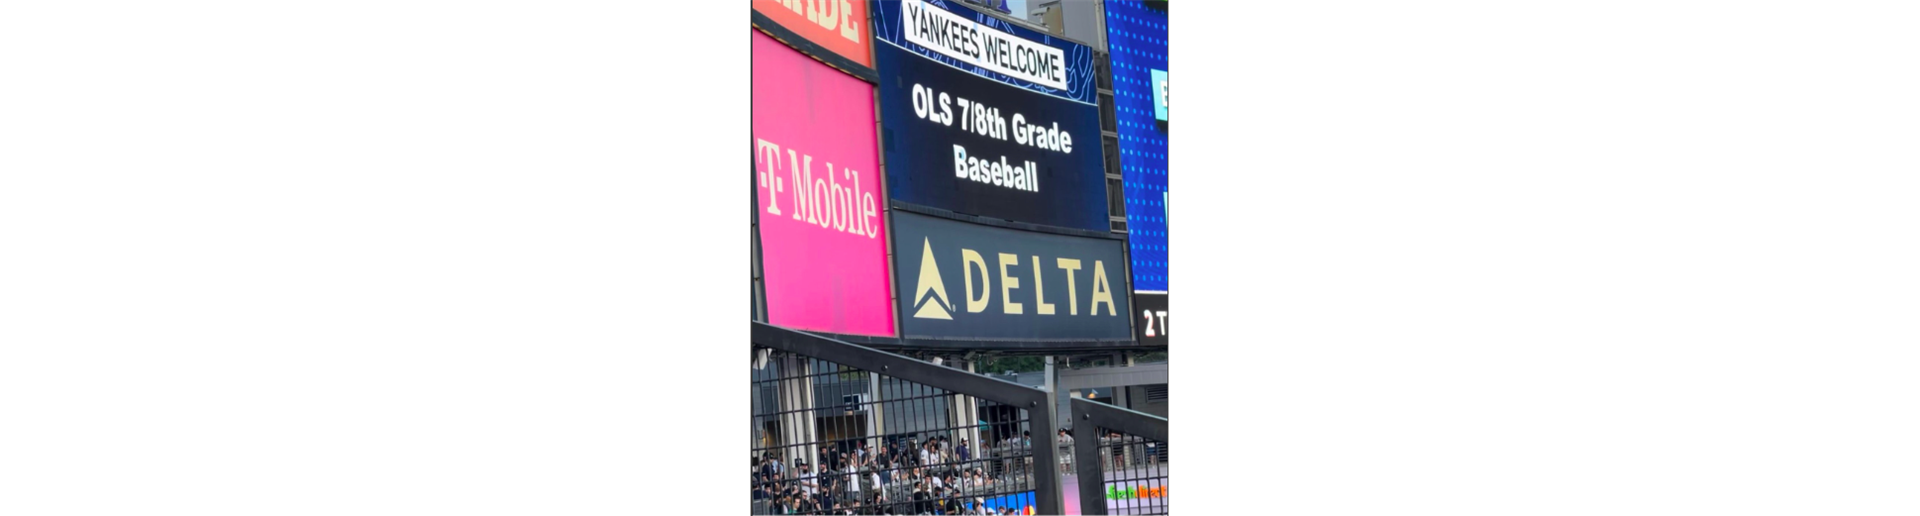 OLS Baseball welcomed by Yankee Stadium